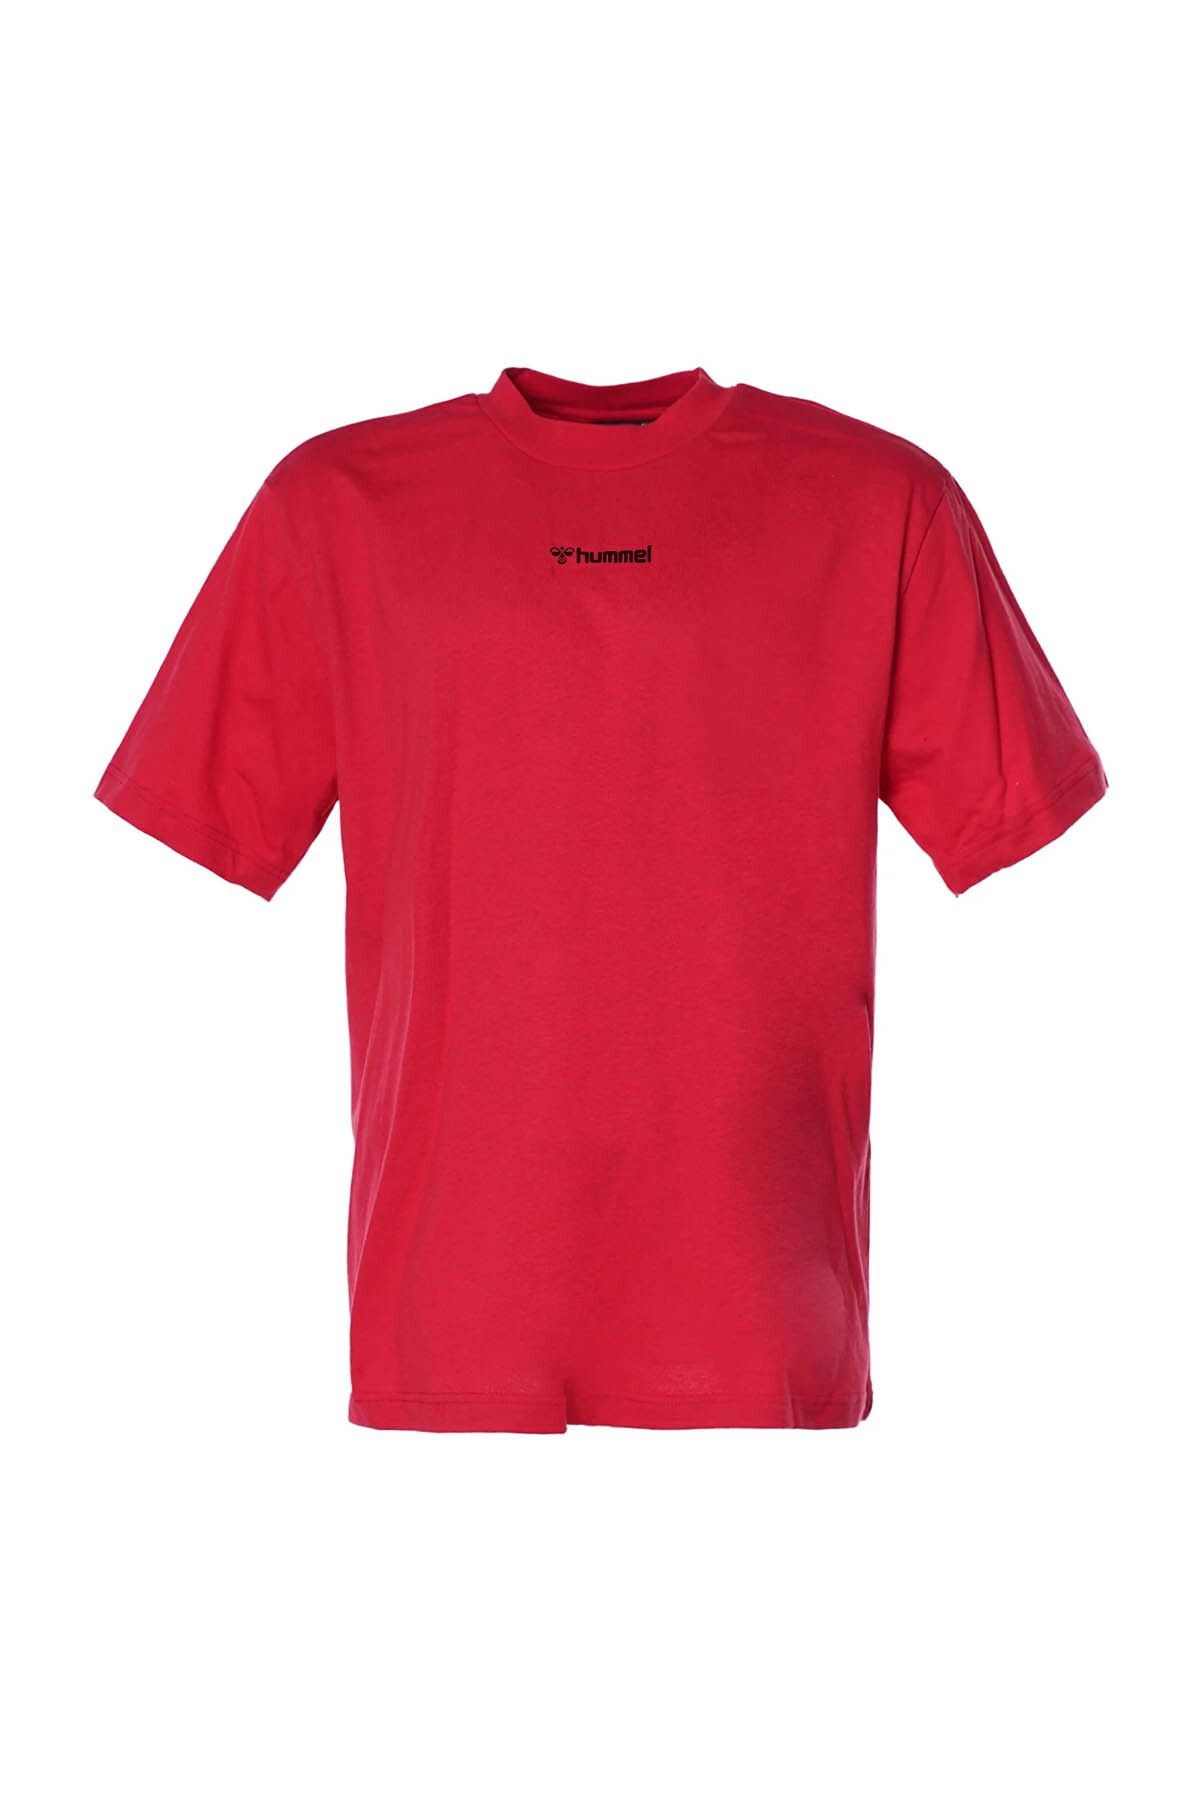 hummel Erkek T-shirt Kırmızı 912030-3658 Hmlmese